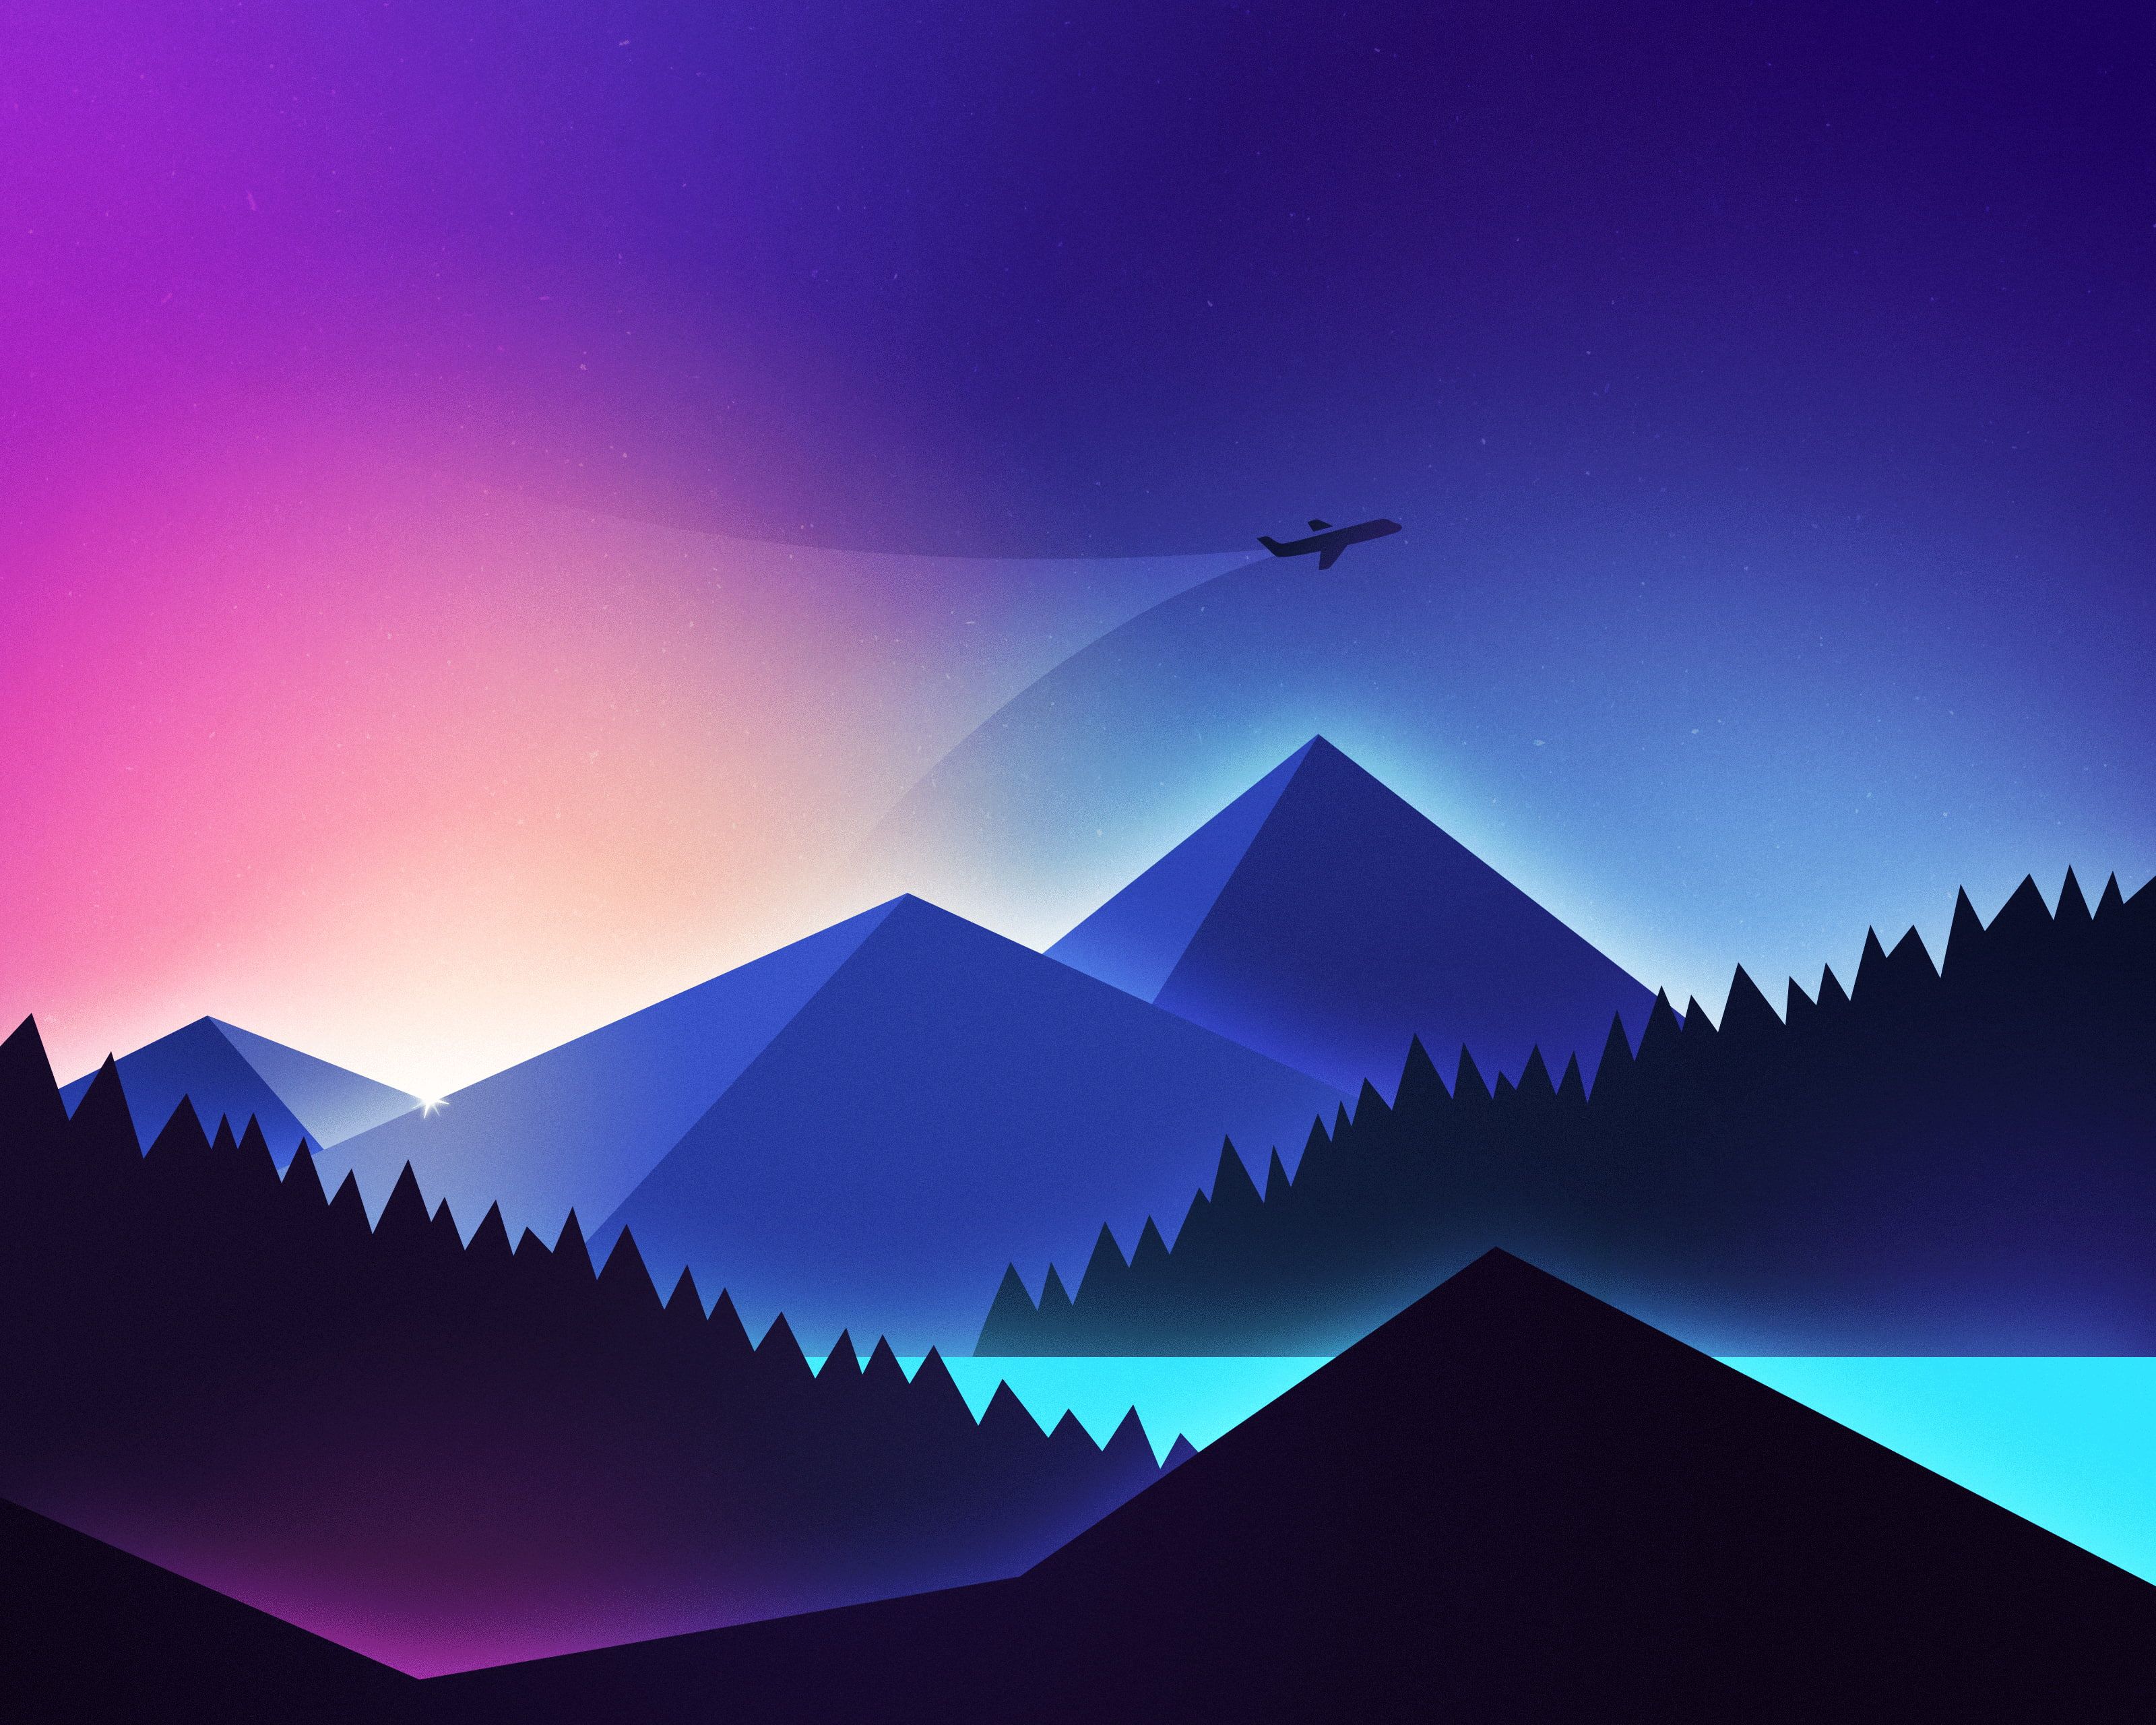 Airplane #Landscape #Vibrant #Neon #Mountains K #wallpaper #hdwallpaper #desktop. Phone wallpaper image, Cool wallpaper for phones, Live wallpaper iphone